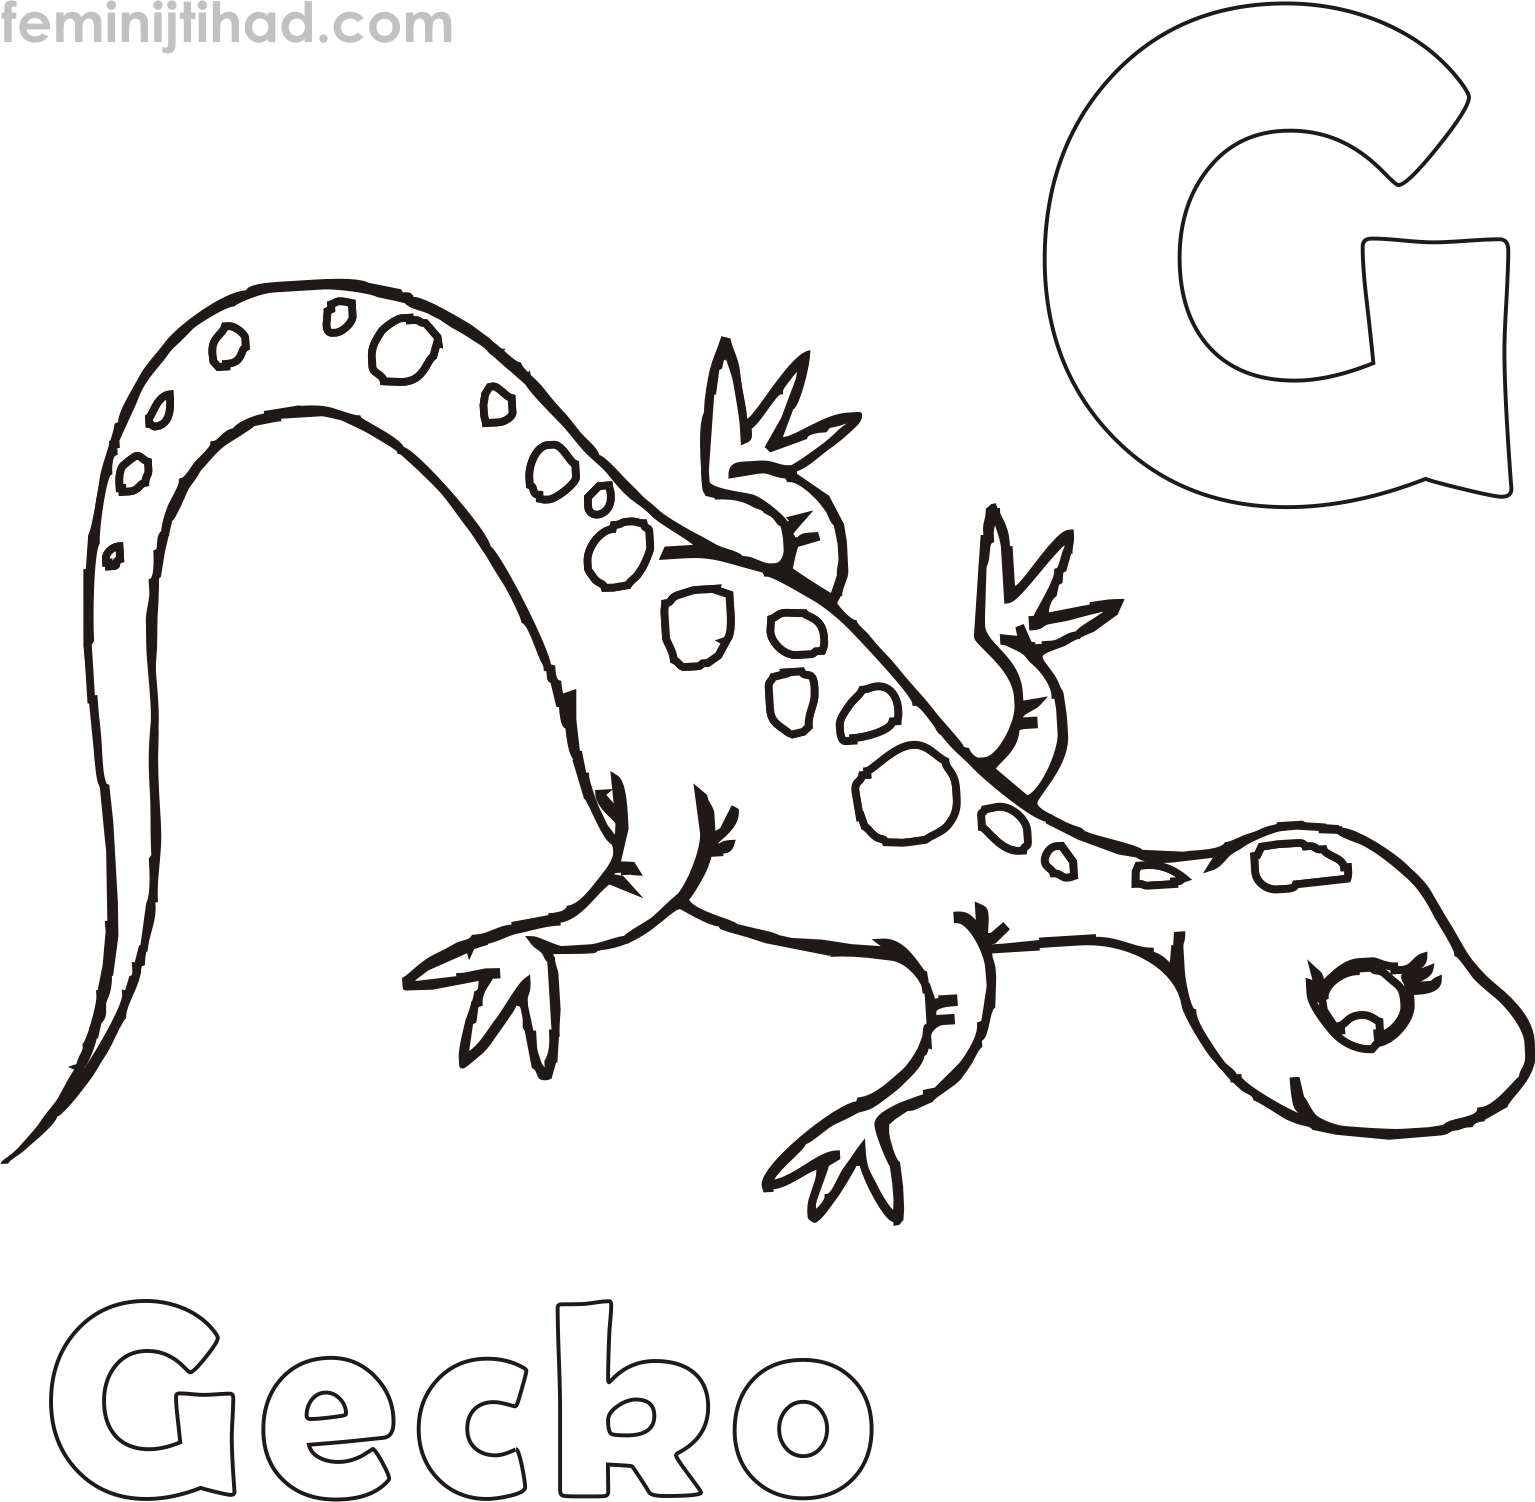 Free Gecko Coloring Sheet to Print